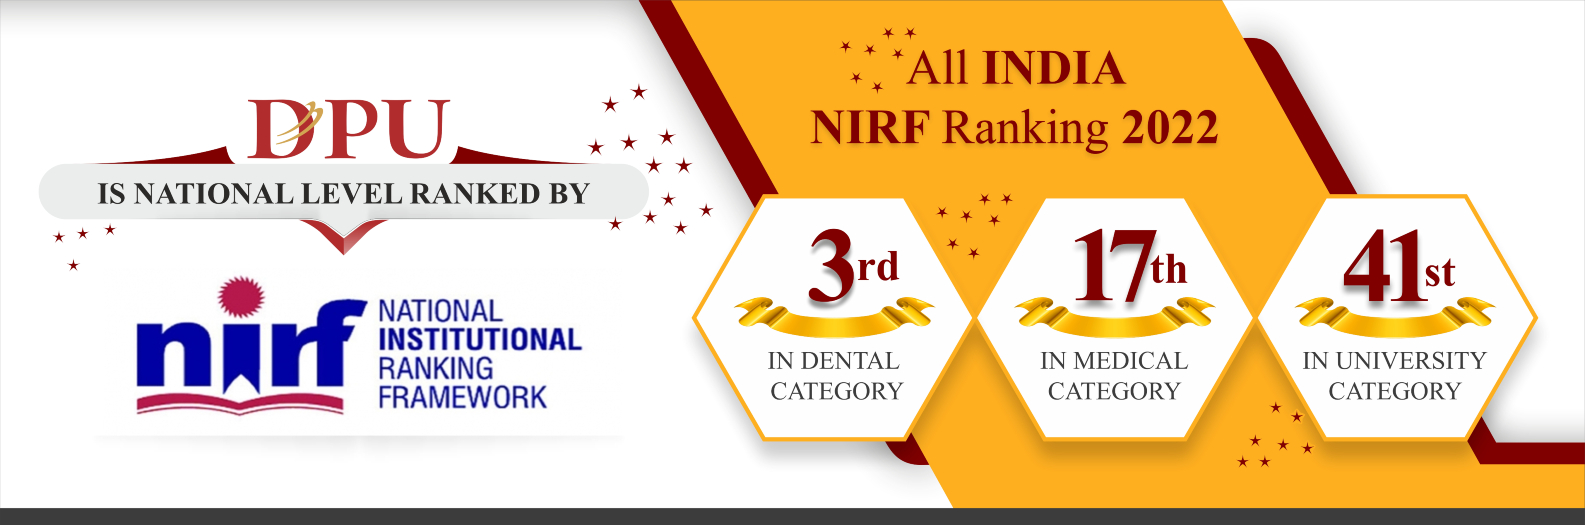 All India NIRF Ranking 2022